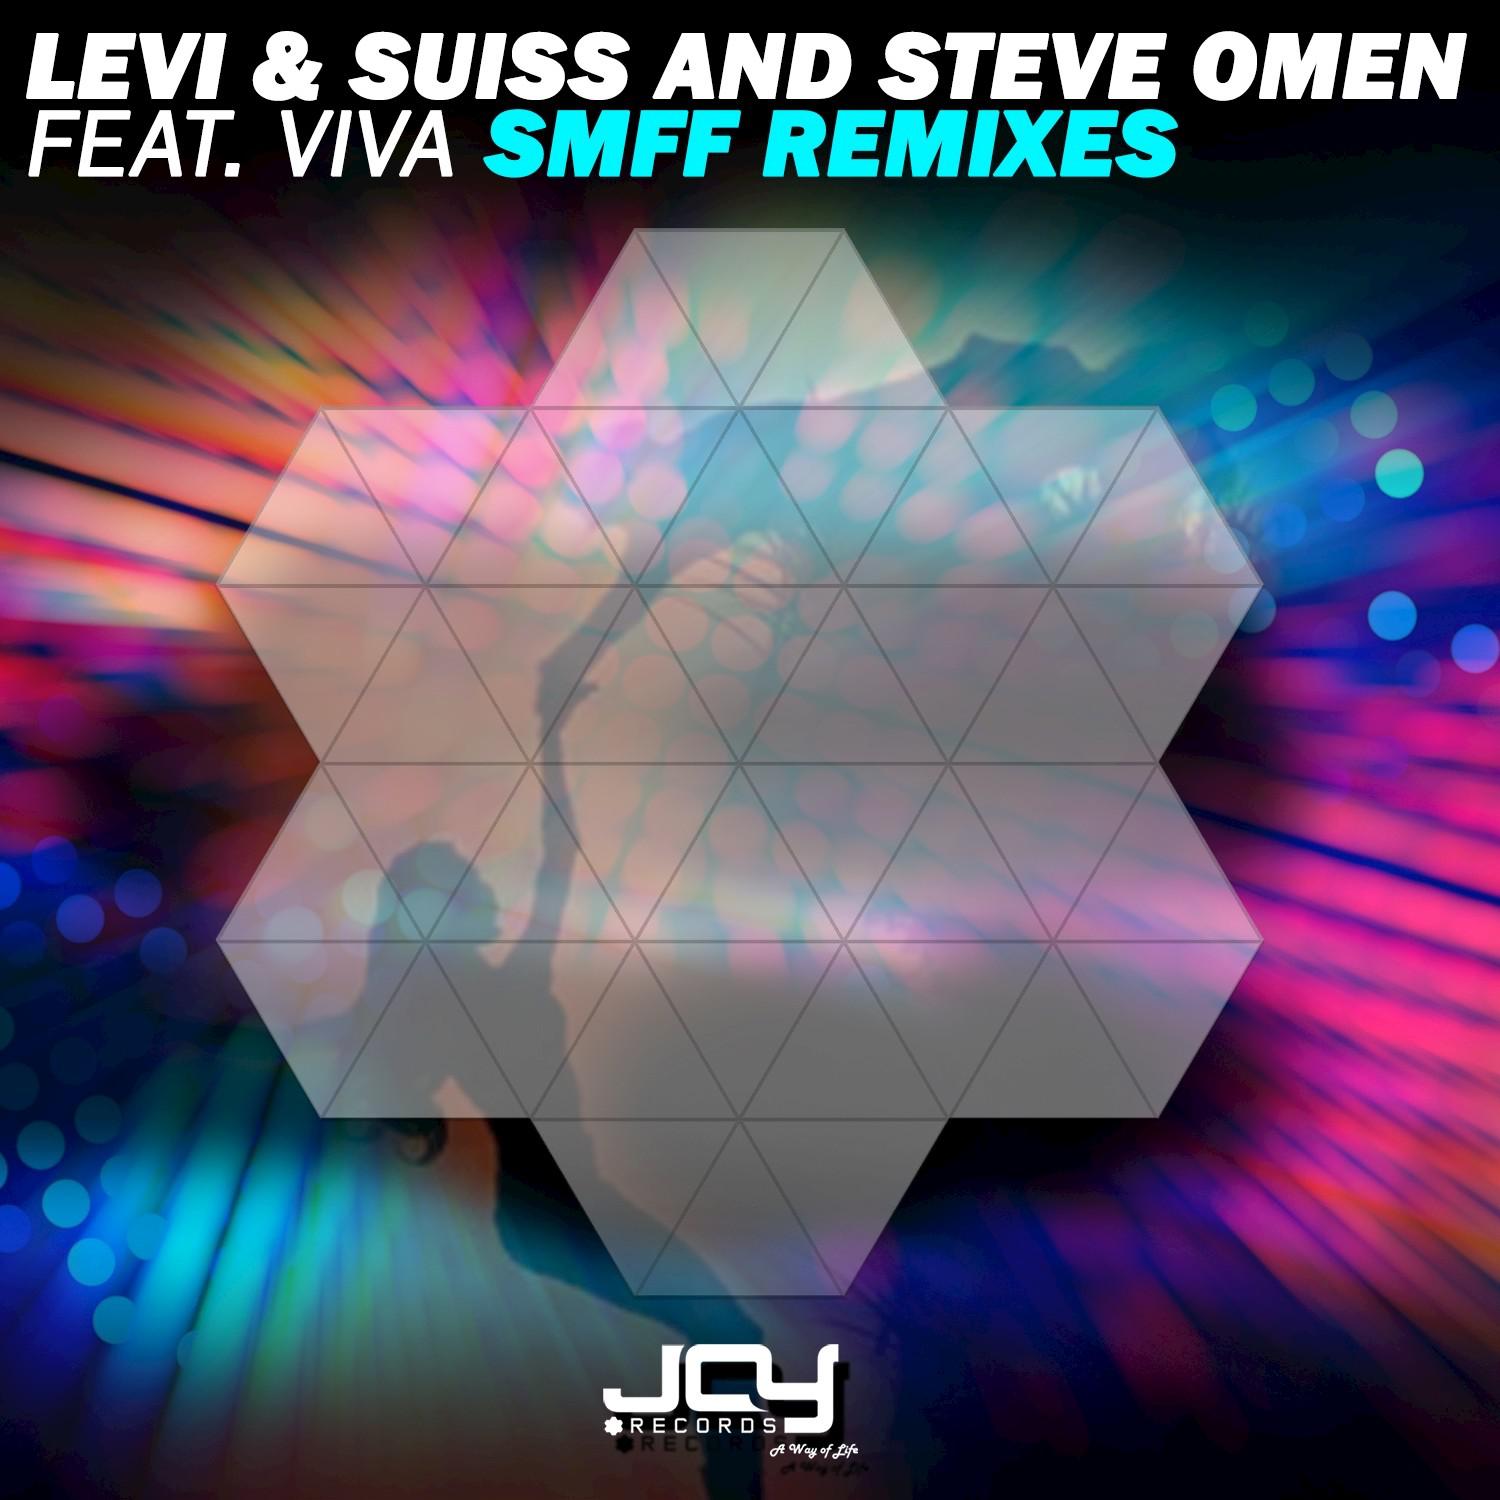 SMFF (Levi & Suiss Uplifting Remix)